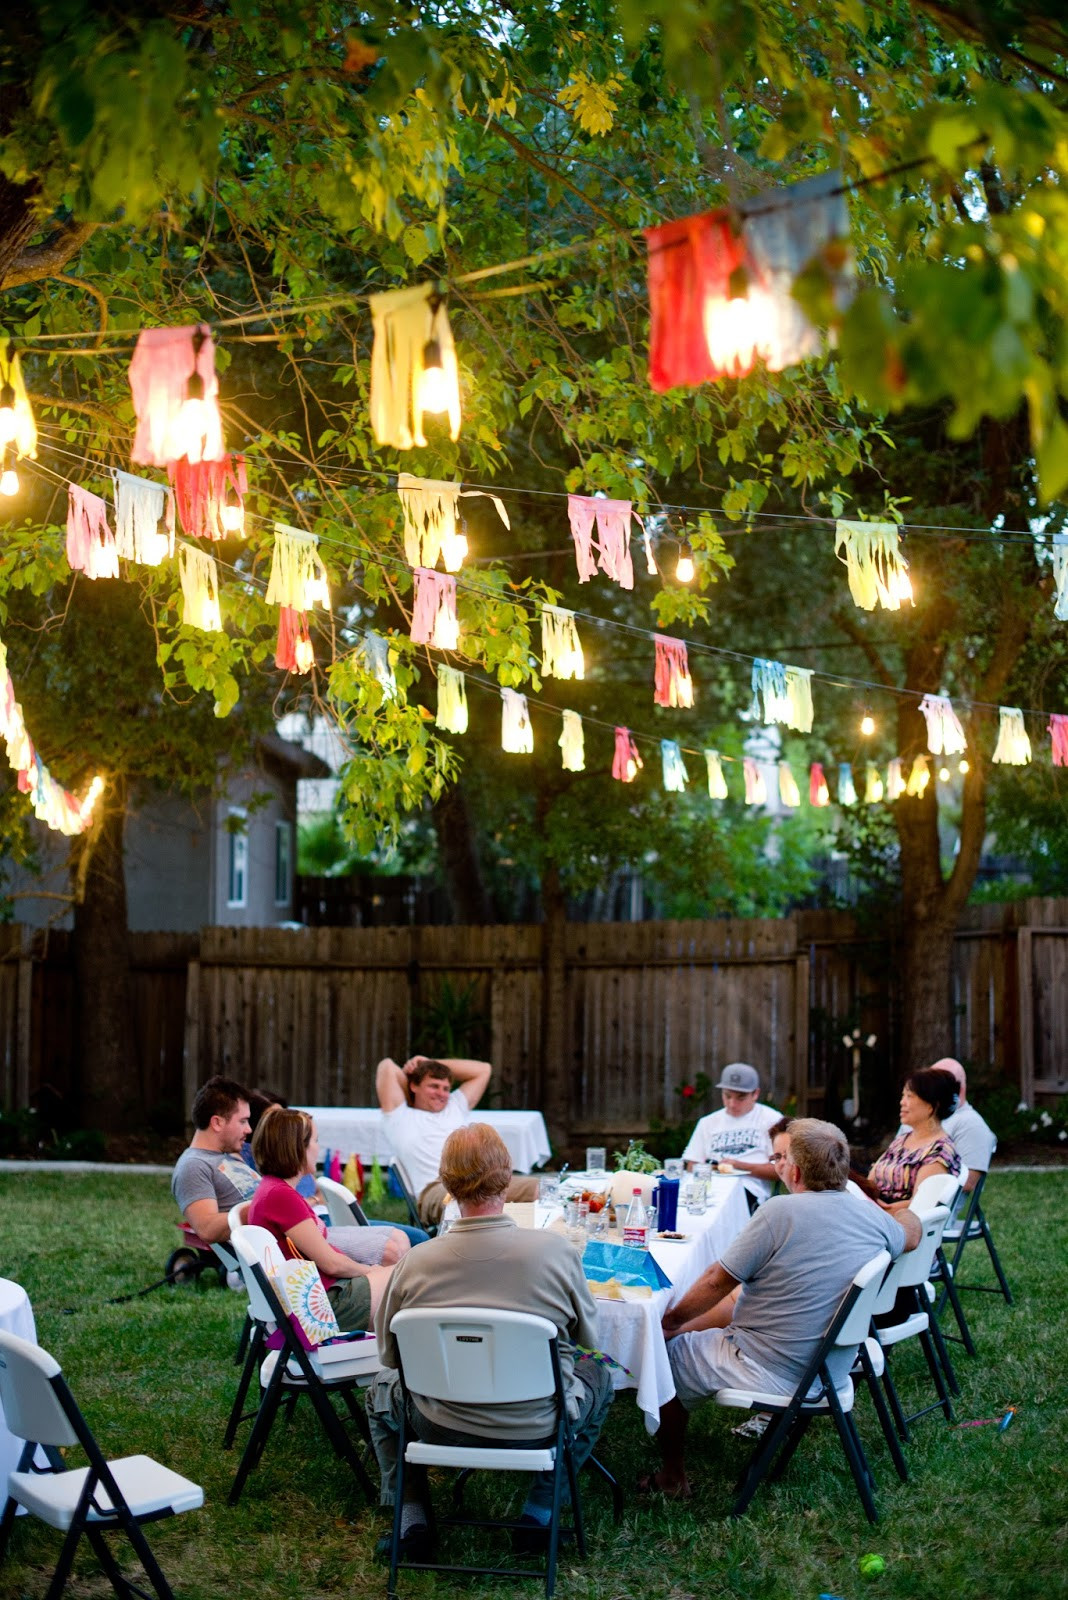 Backyard Tea Lights Party Ideas
 Domestic Fashionista Backyard Fall Celebration